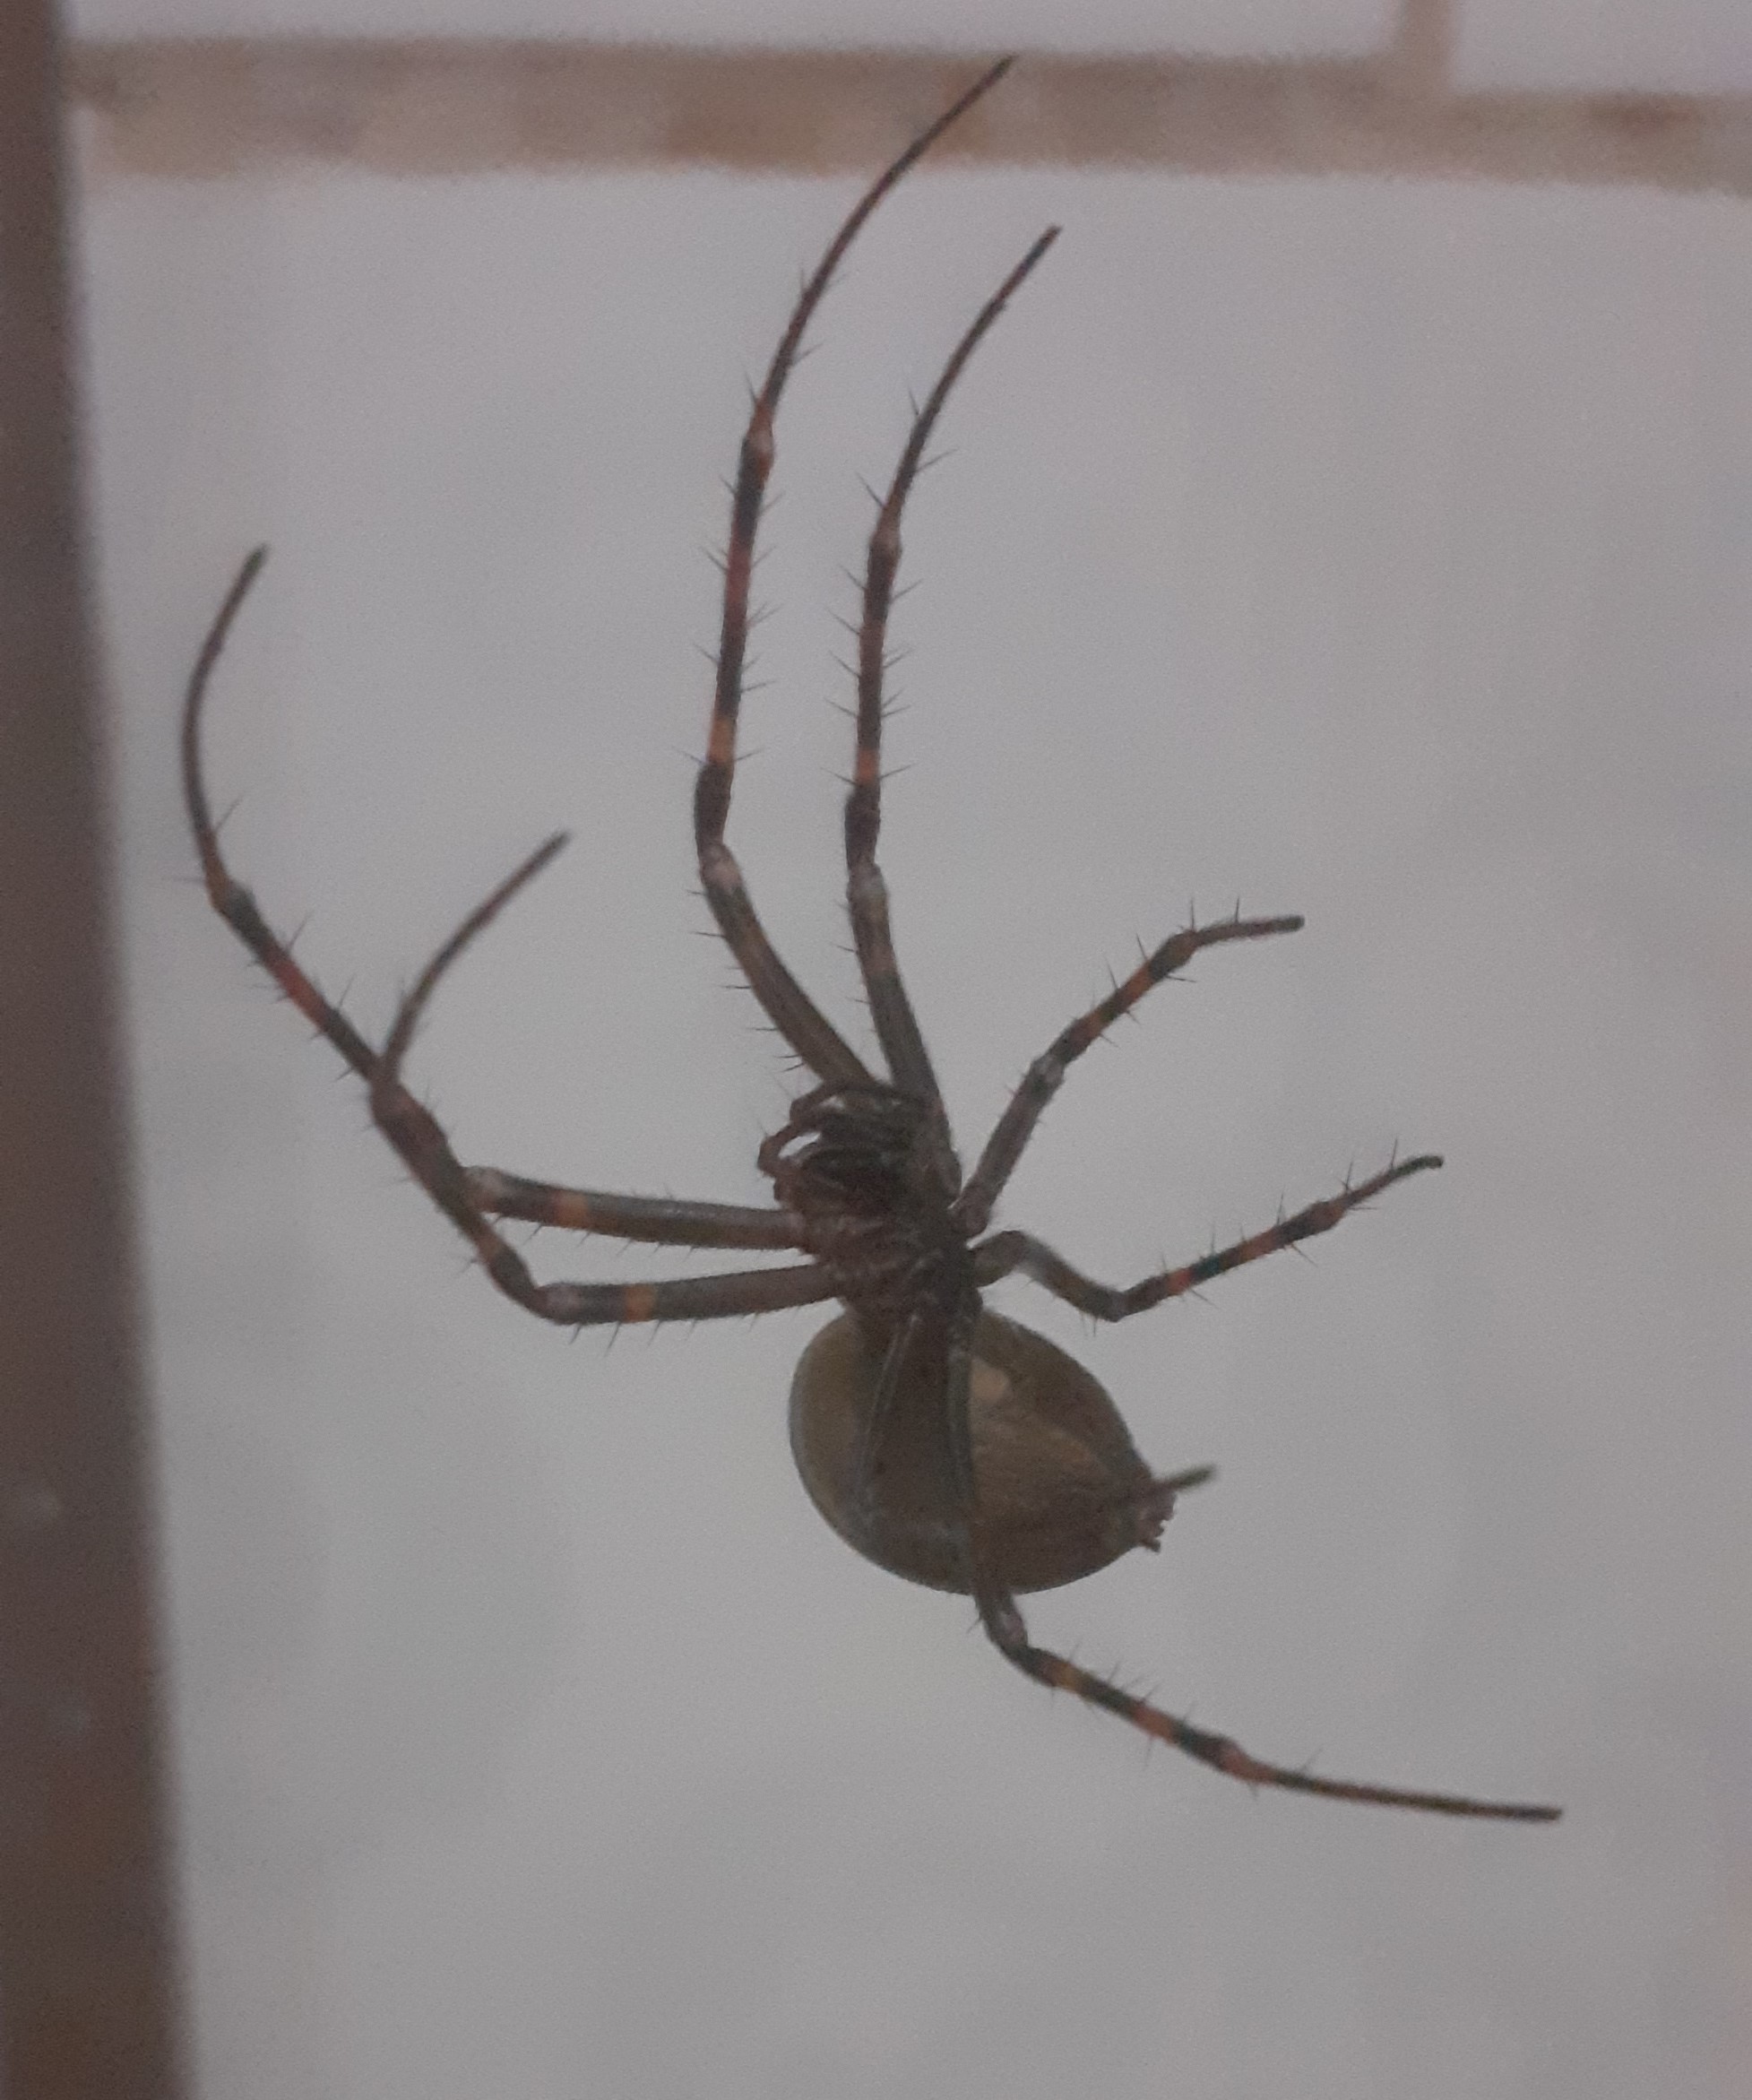 cave spider in bathroom .jpg